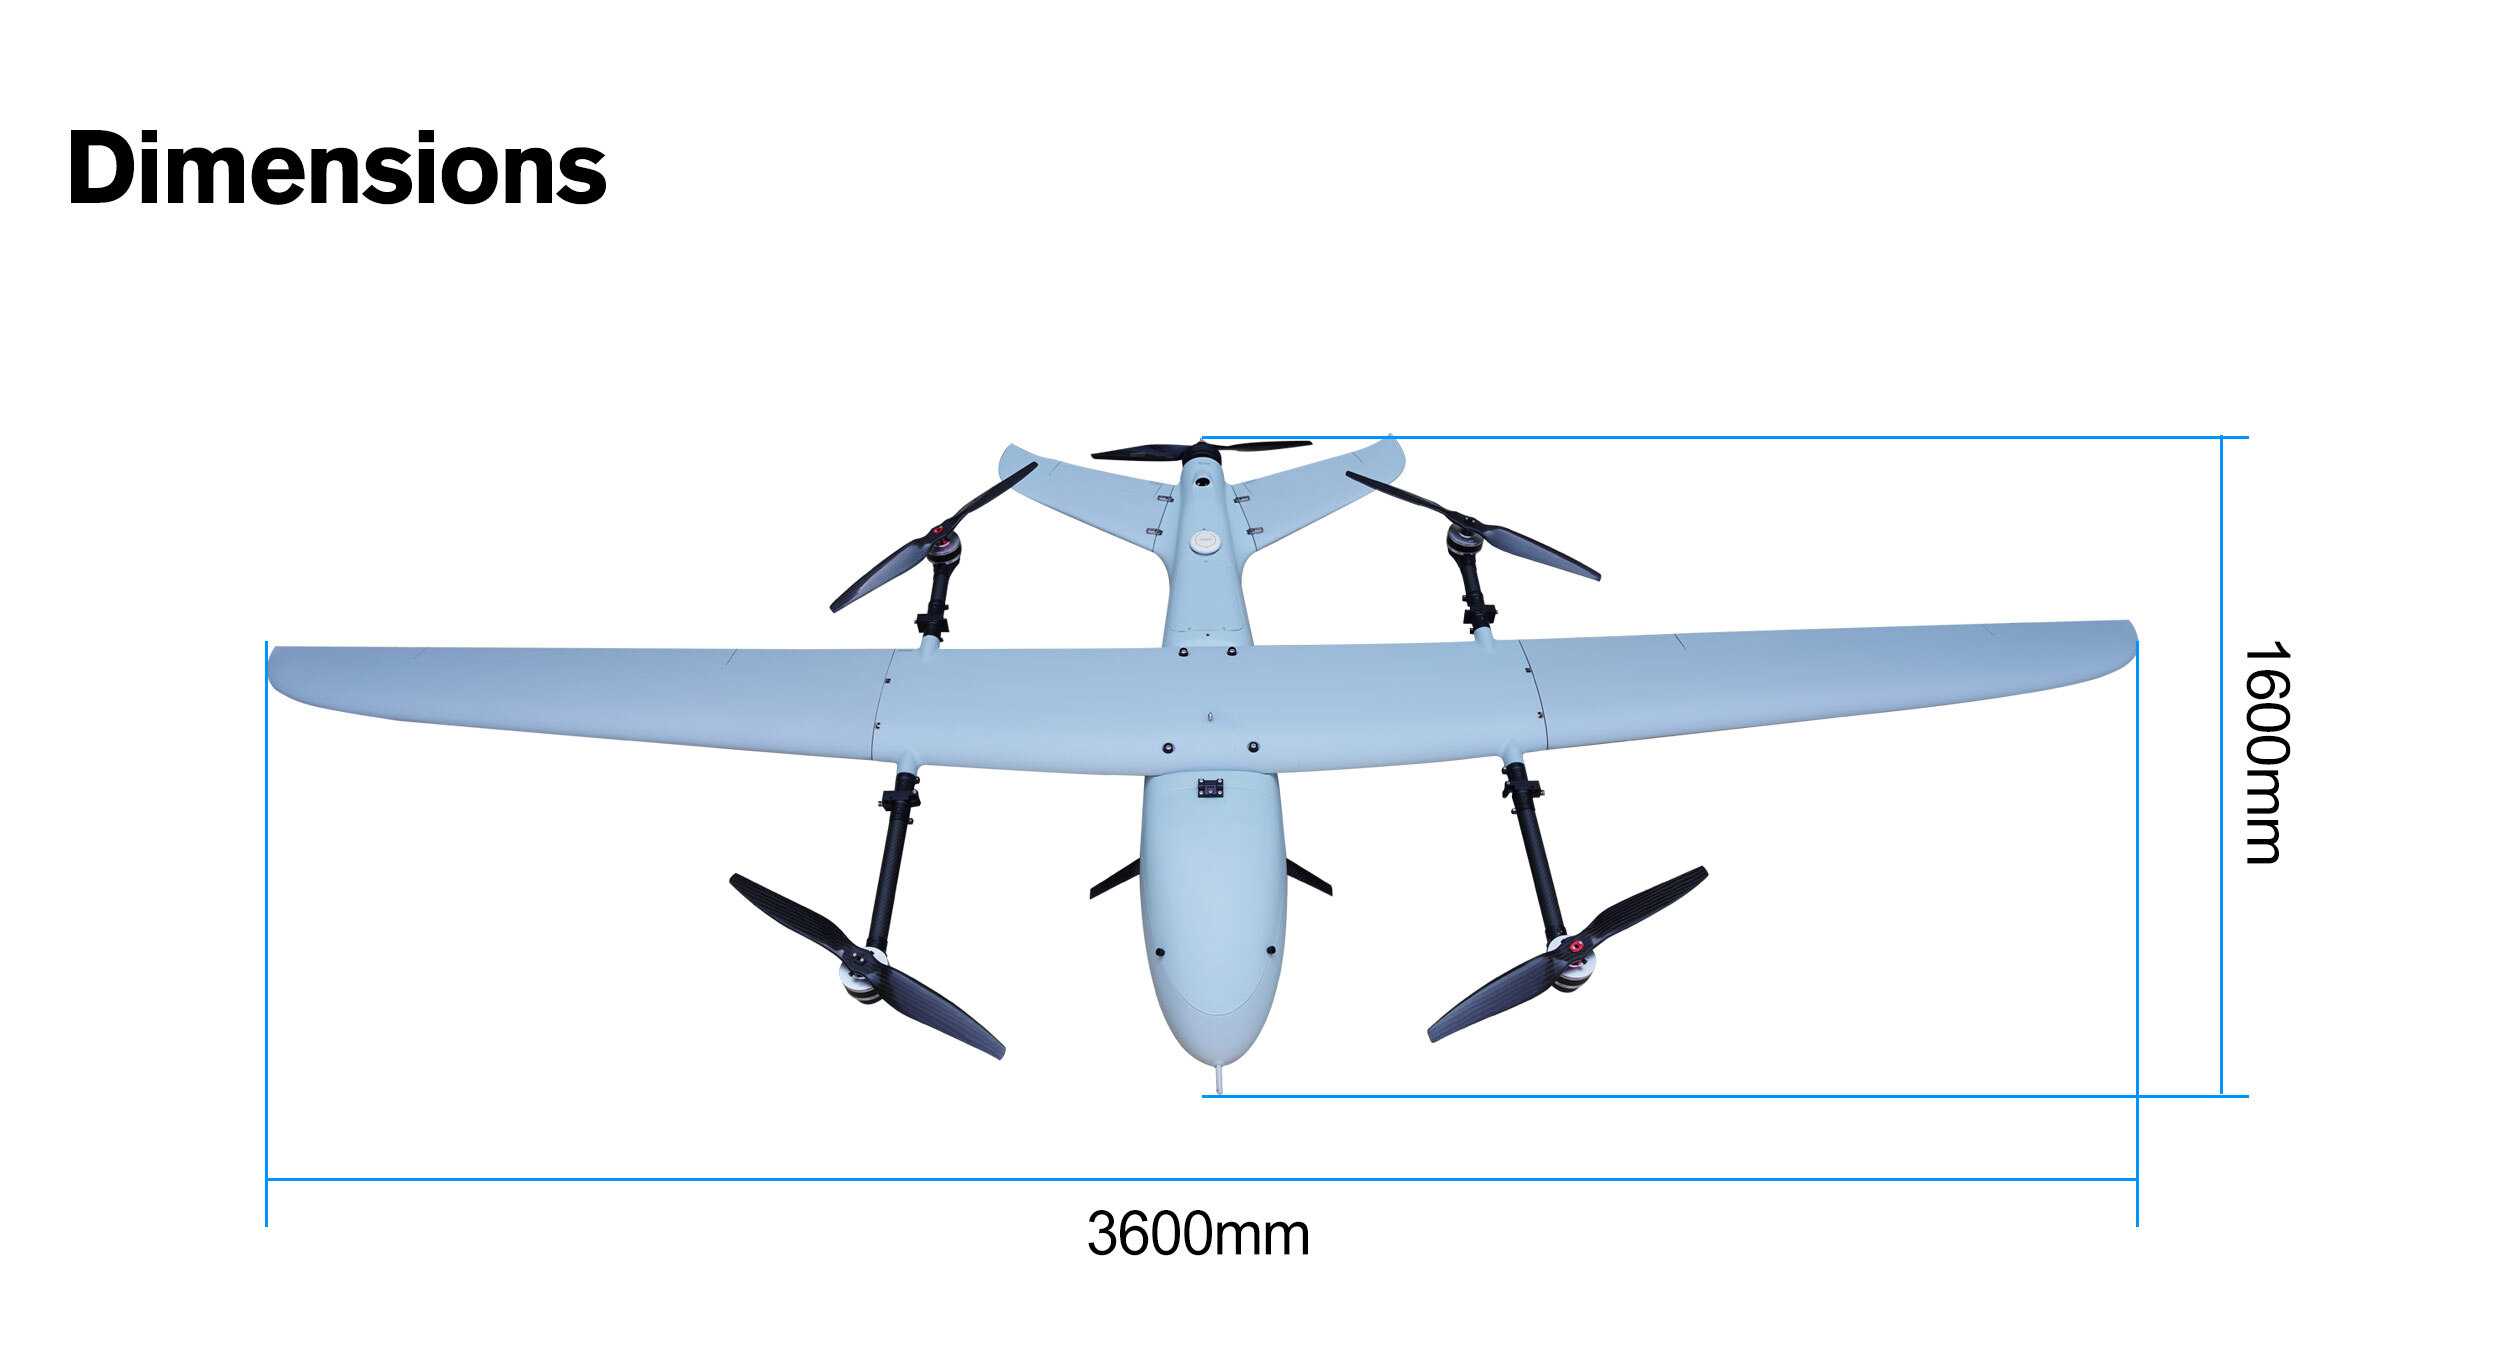 Humpback Whale 360  VTOL FIXED WING UAV Humpback Whales 360 VTOL FIXED WING UAV vtol,uav,unmannedaircraft,aviation,drones,uavs,vtoluav,unmannedsystems,vtolaircraft,vtoldrone,aircraft,uas,surveillance,survey,surveyin